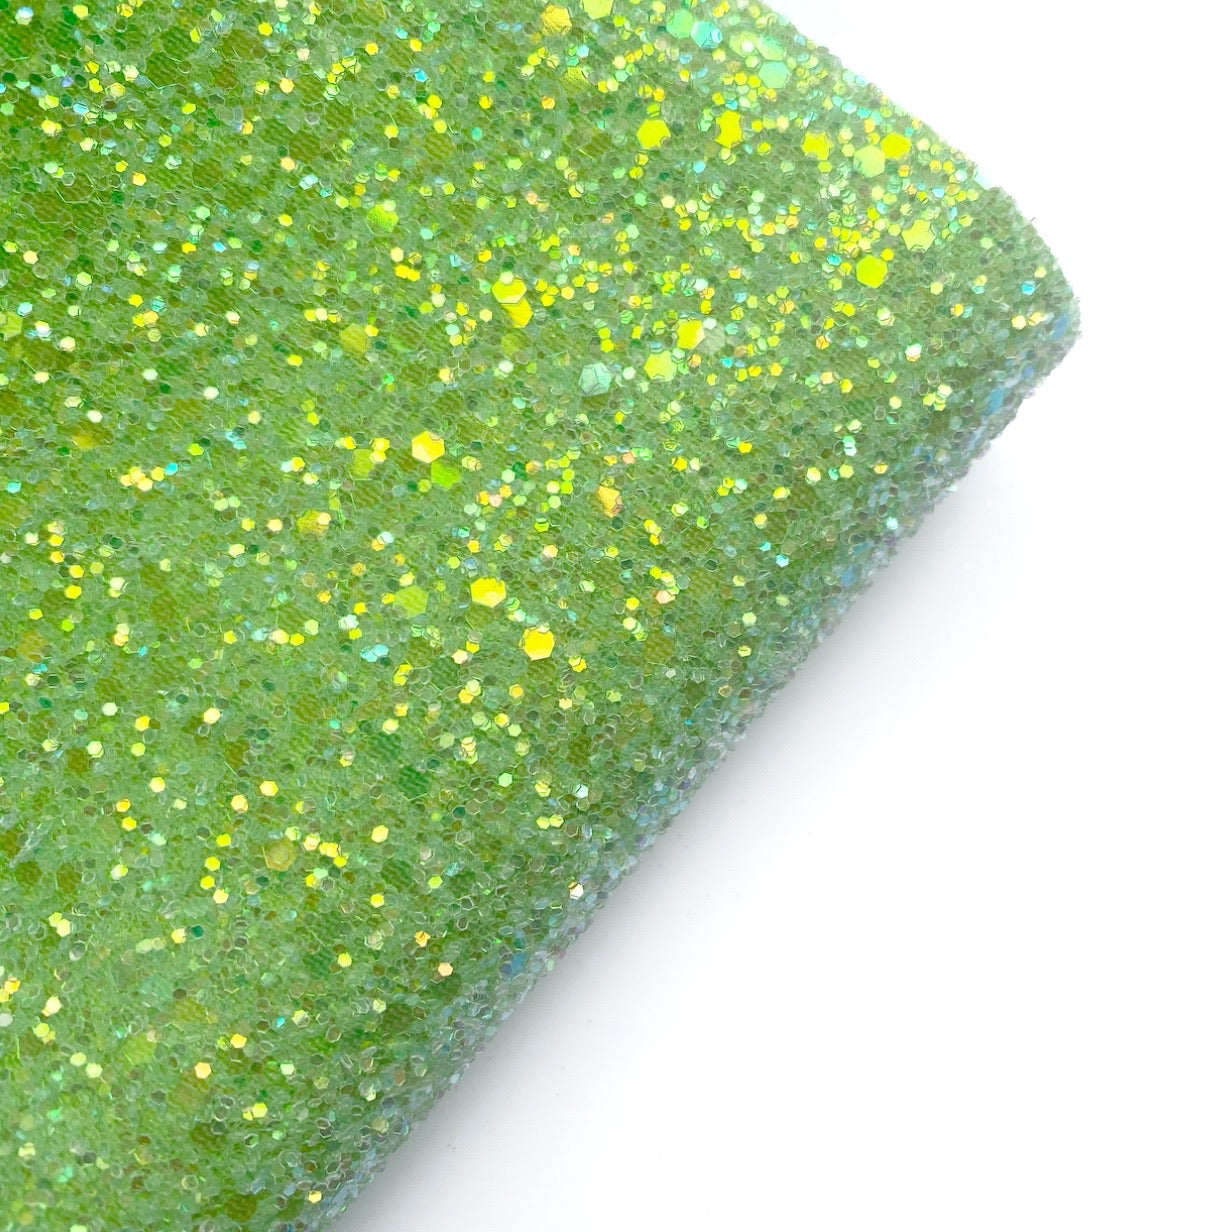 Grassy Green Fairytales Lux Premium Chunky Glitter Fabric